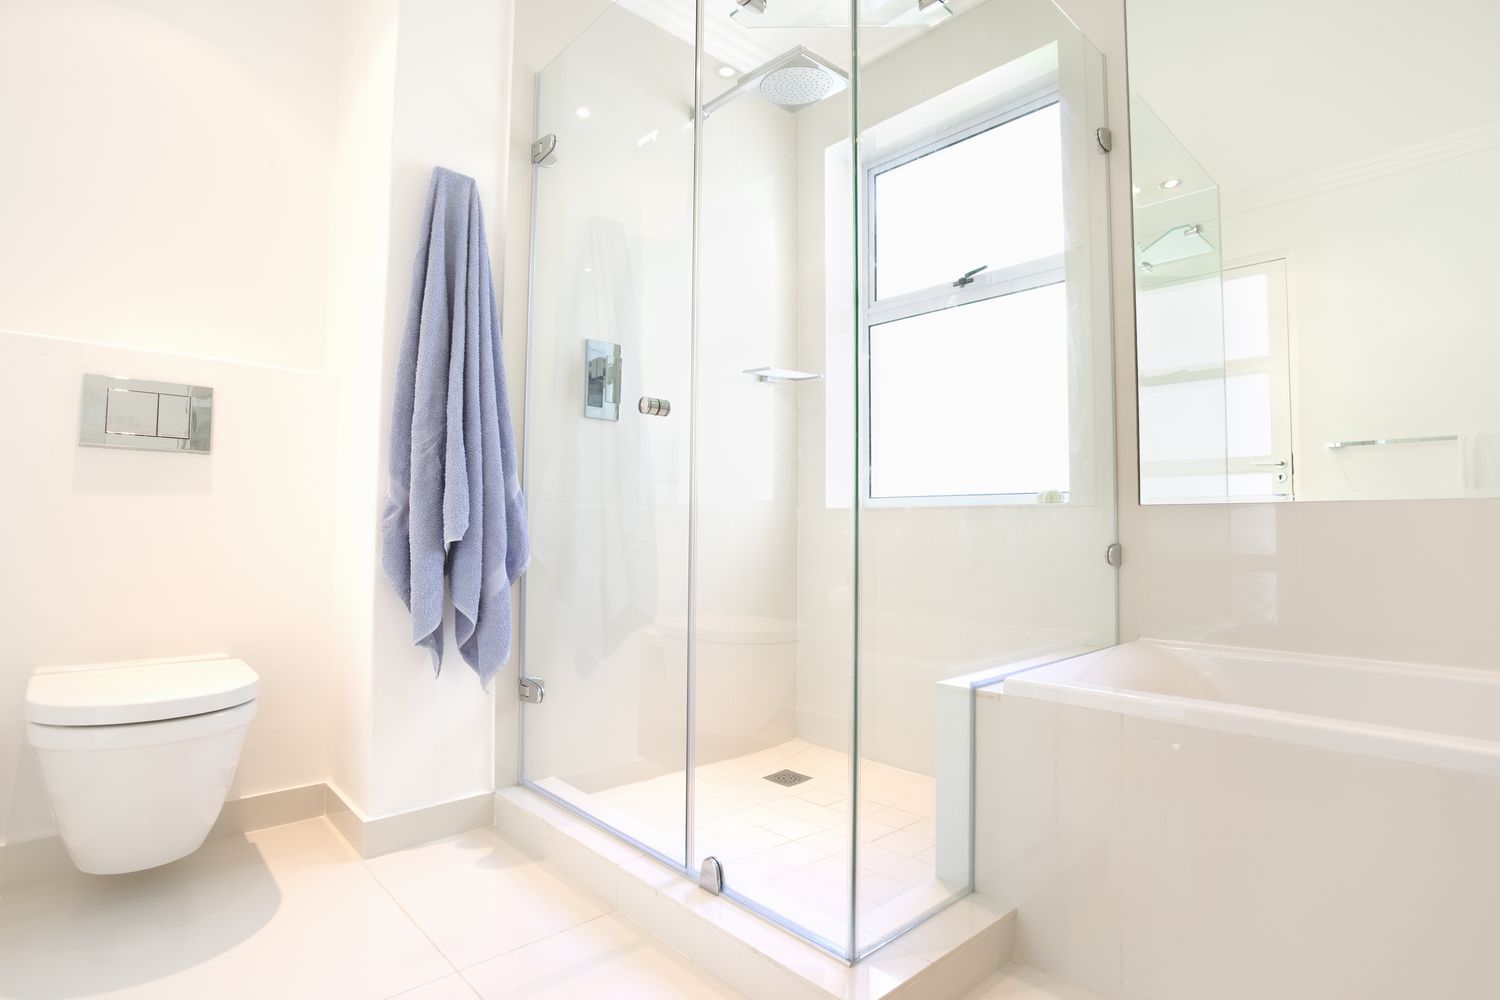 Modern domestic bathroom with window in shower